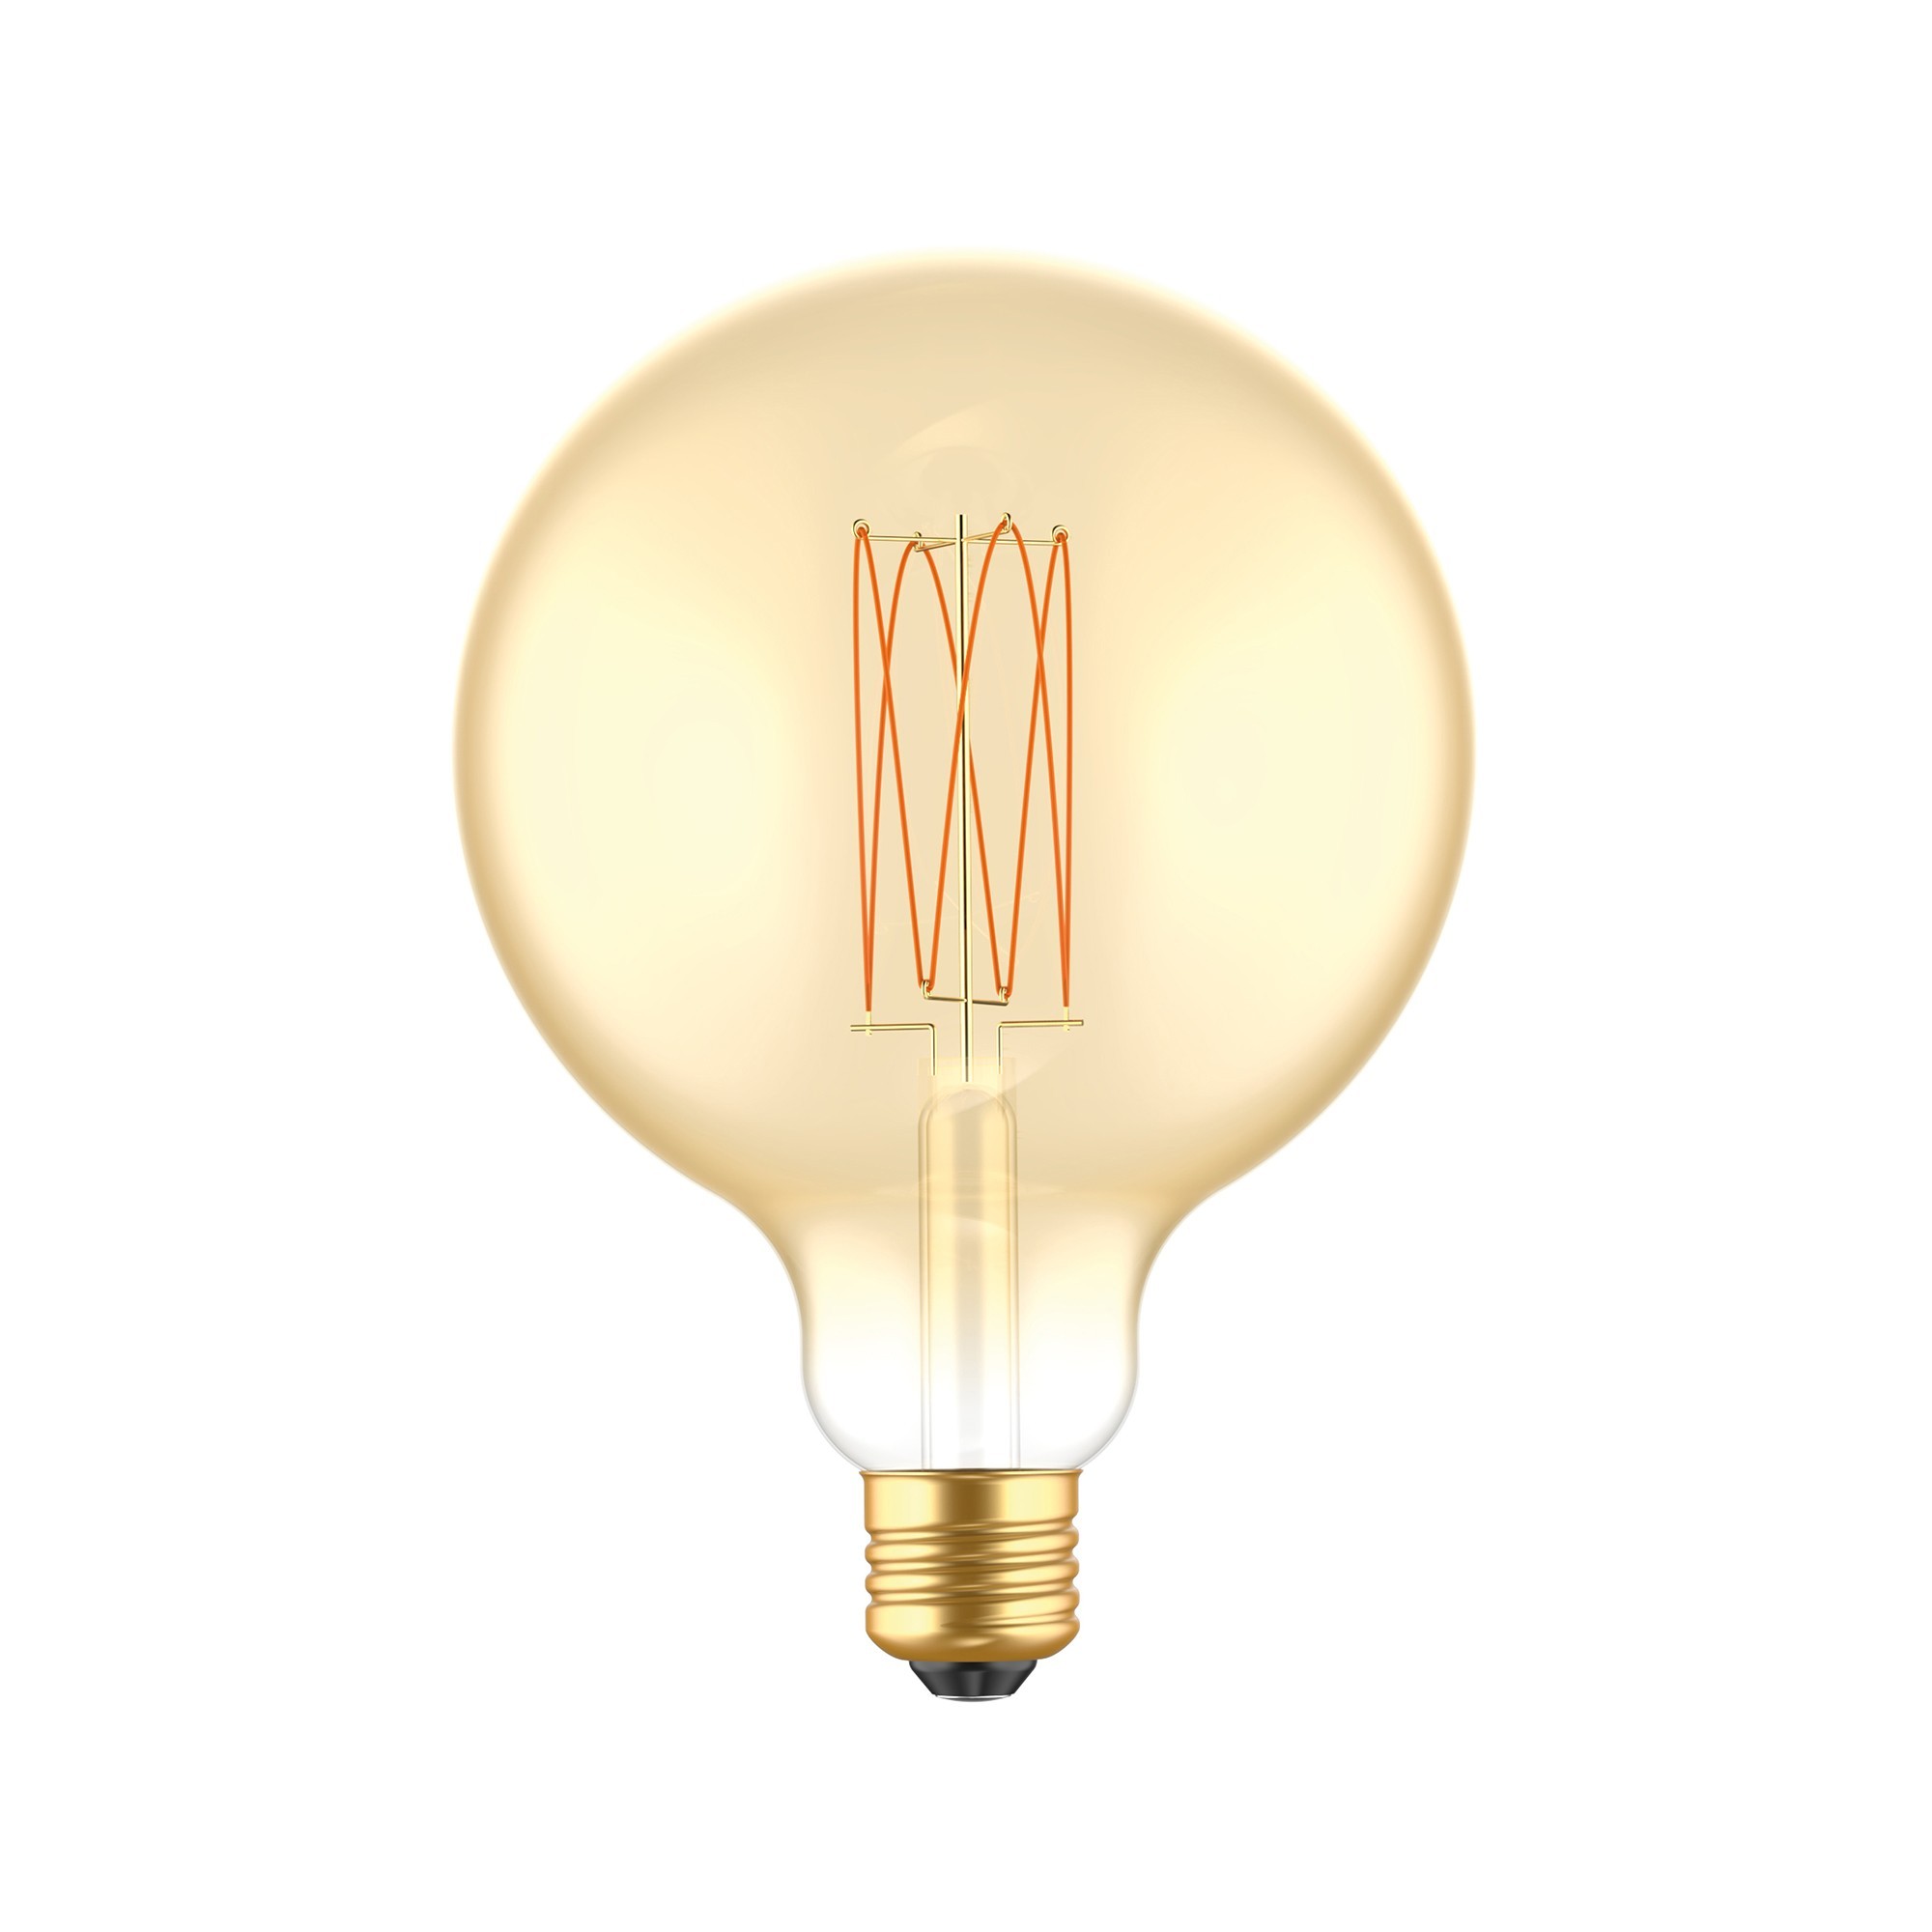 C56 - LED Light Bulb G125, E27, 7W, 2700K, 640Lm, with extra slim vertical filament, golden glass